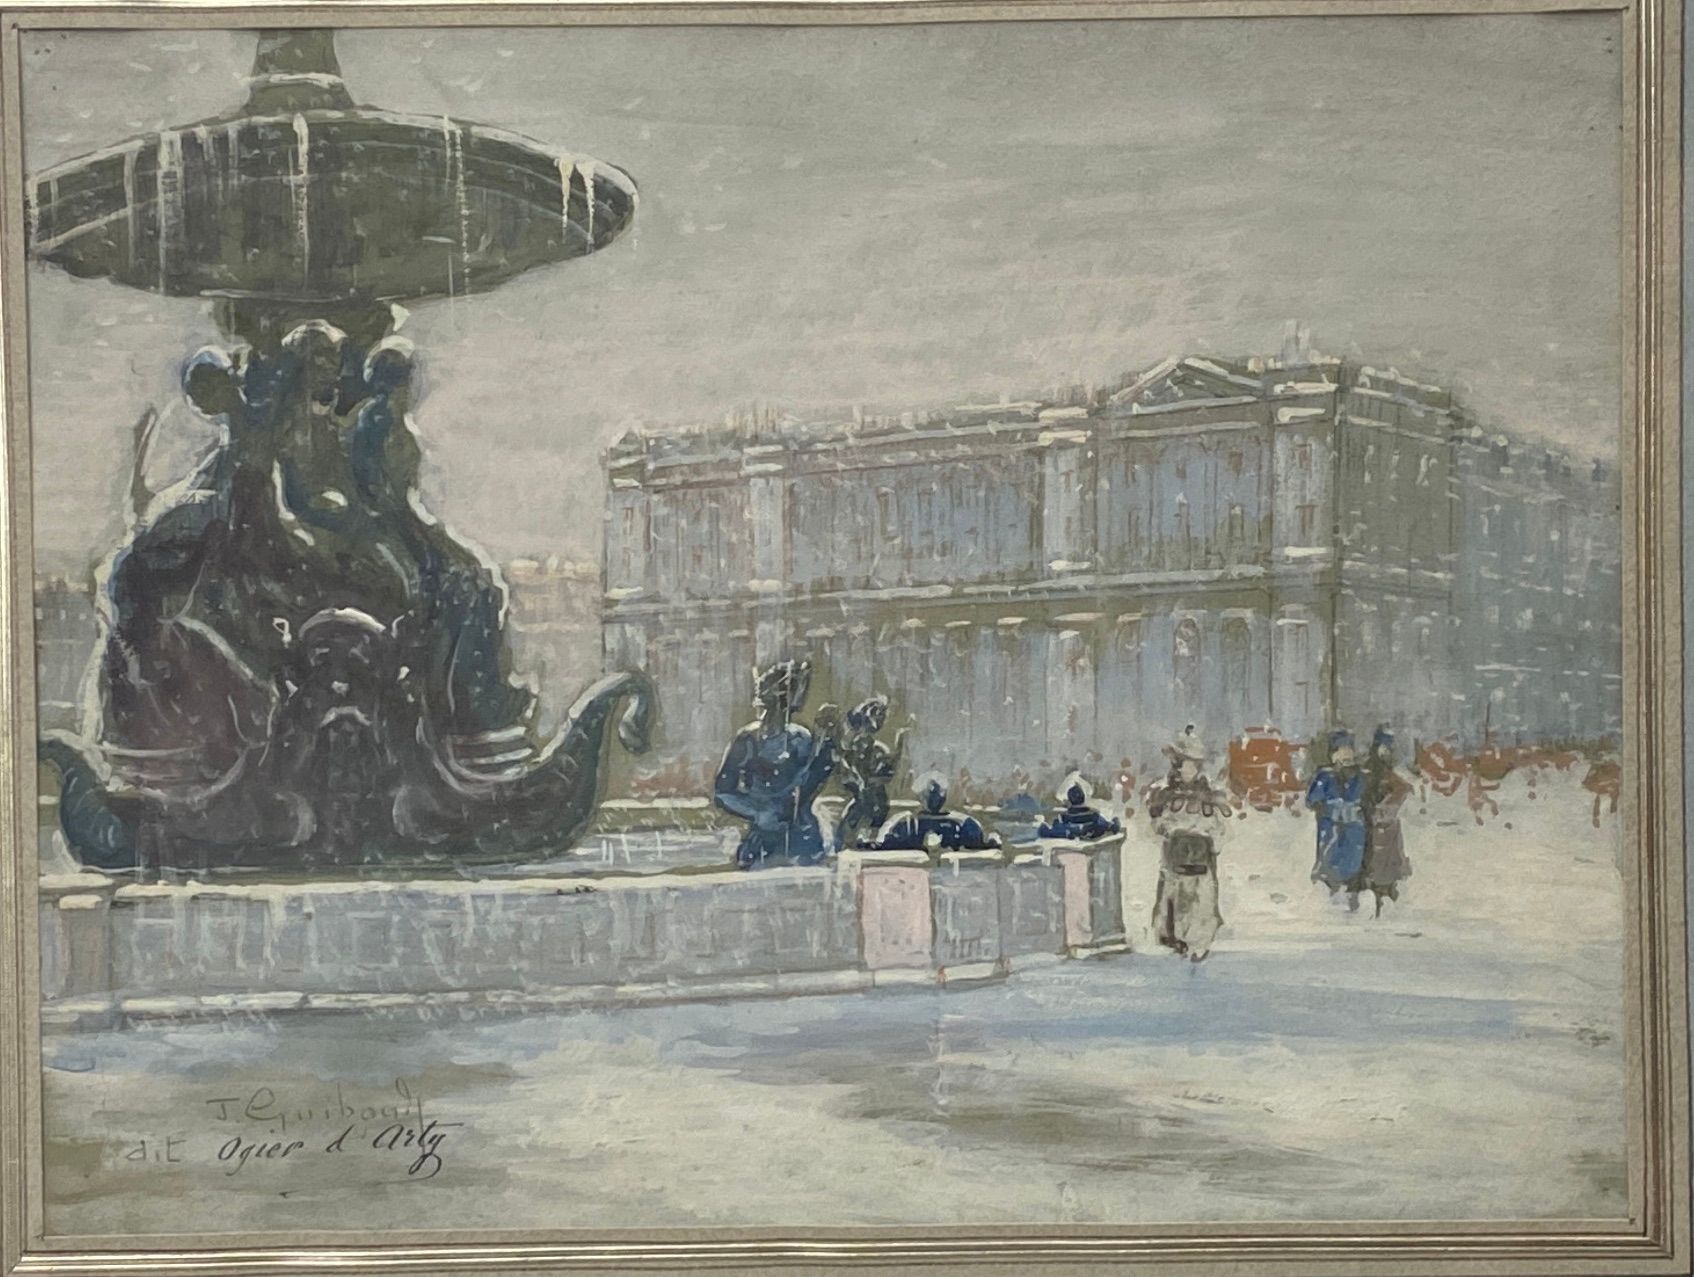 Null Ogier d'Arty (20世纪)

雪中的协和广场

纸上混合媒体，左下角签名

尺寸：24 x 30,5厘米